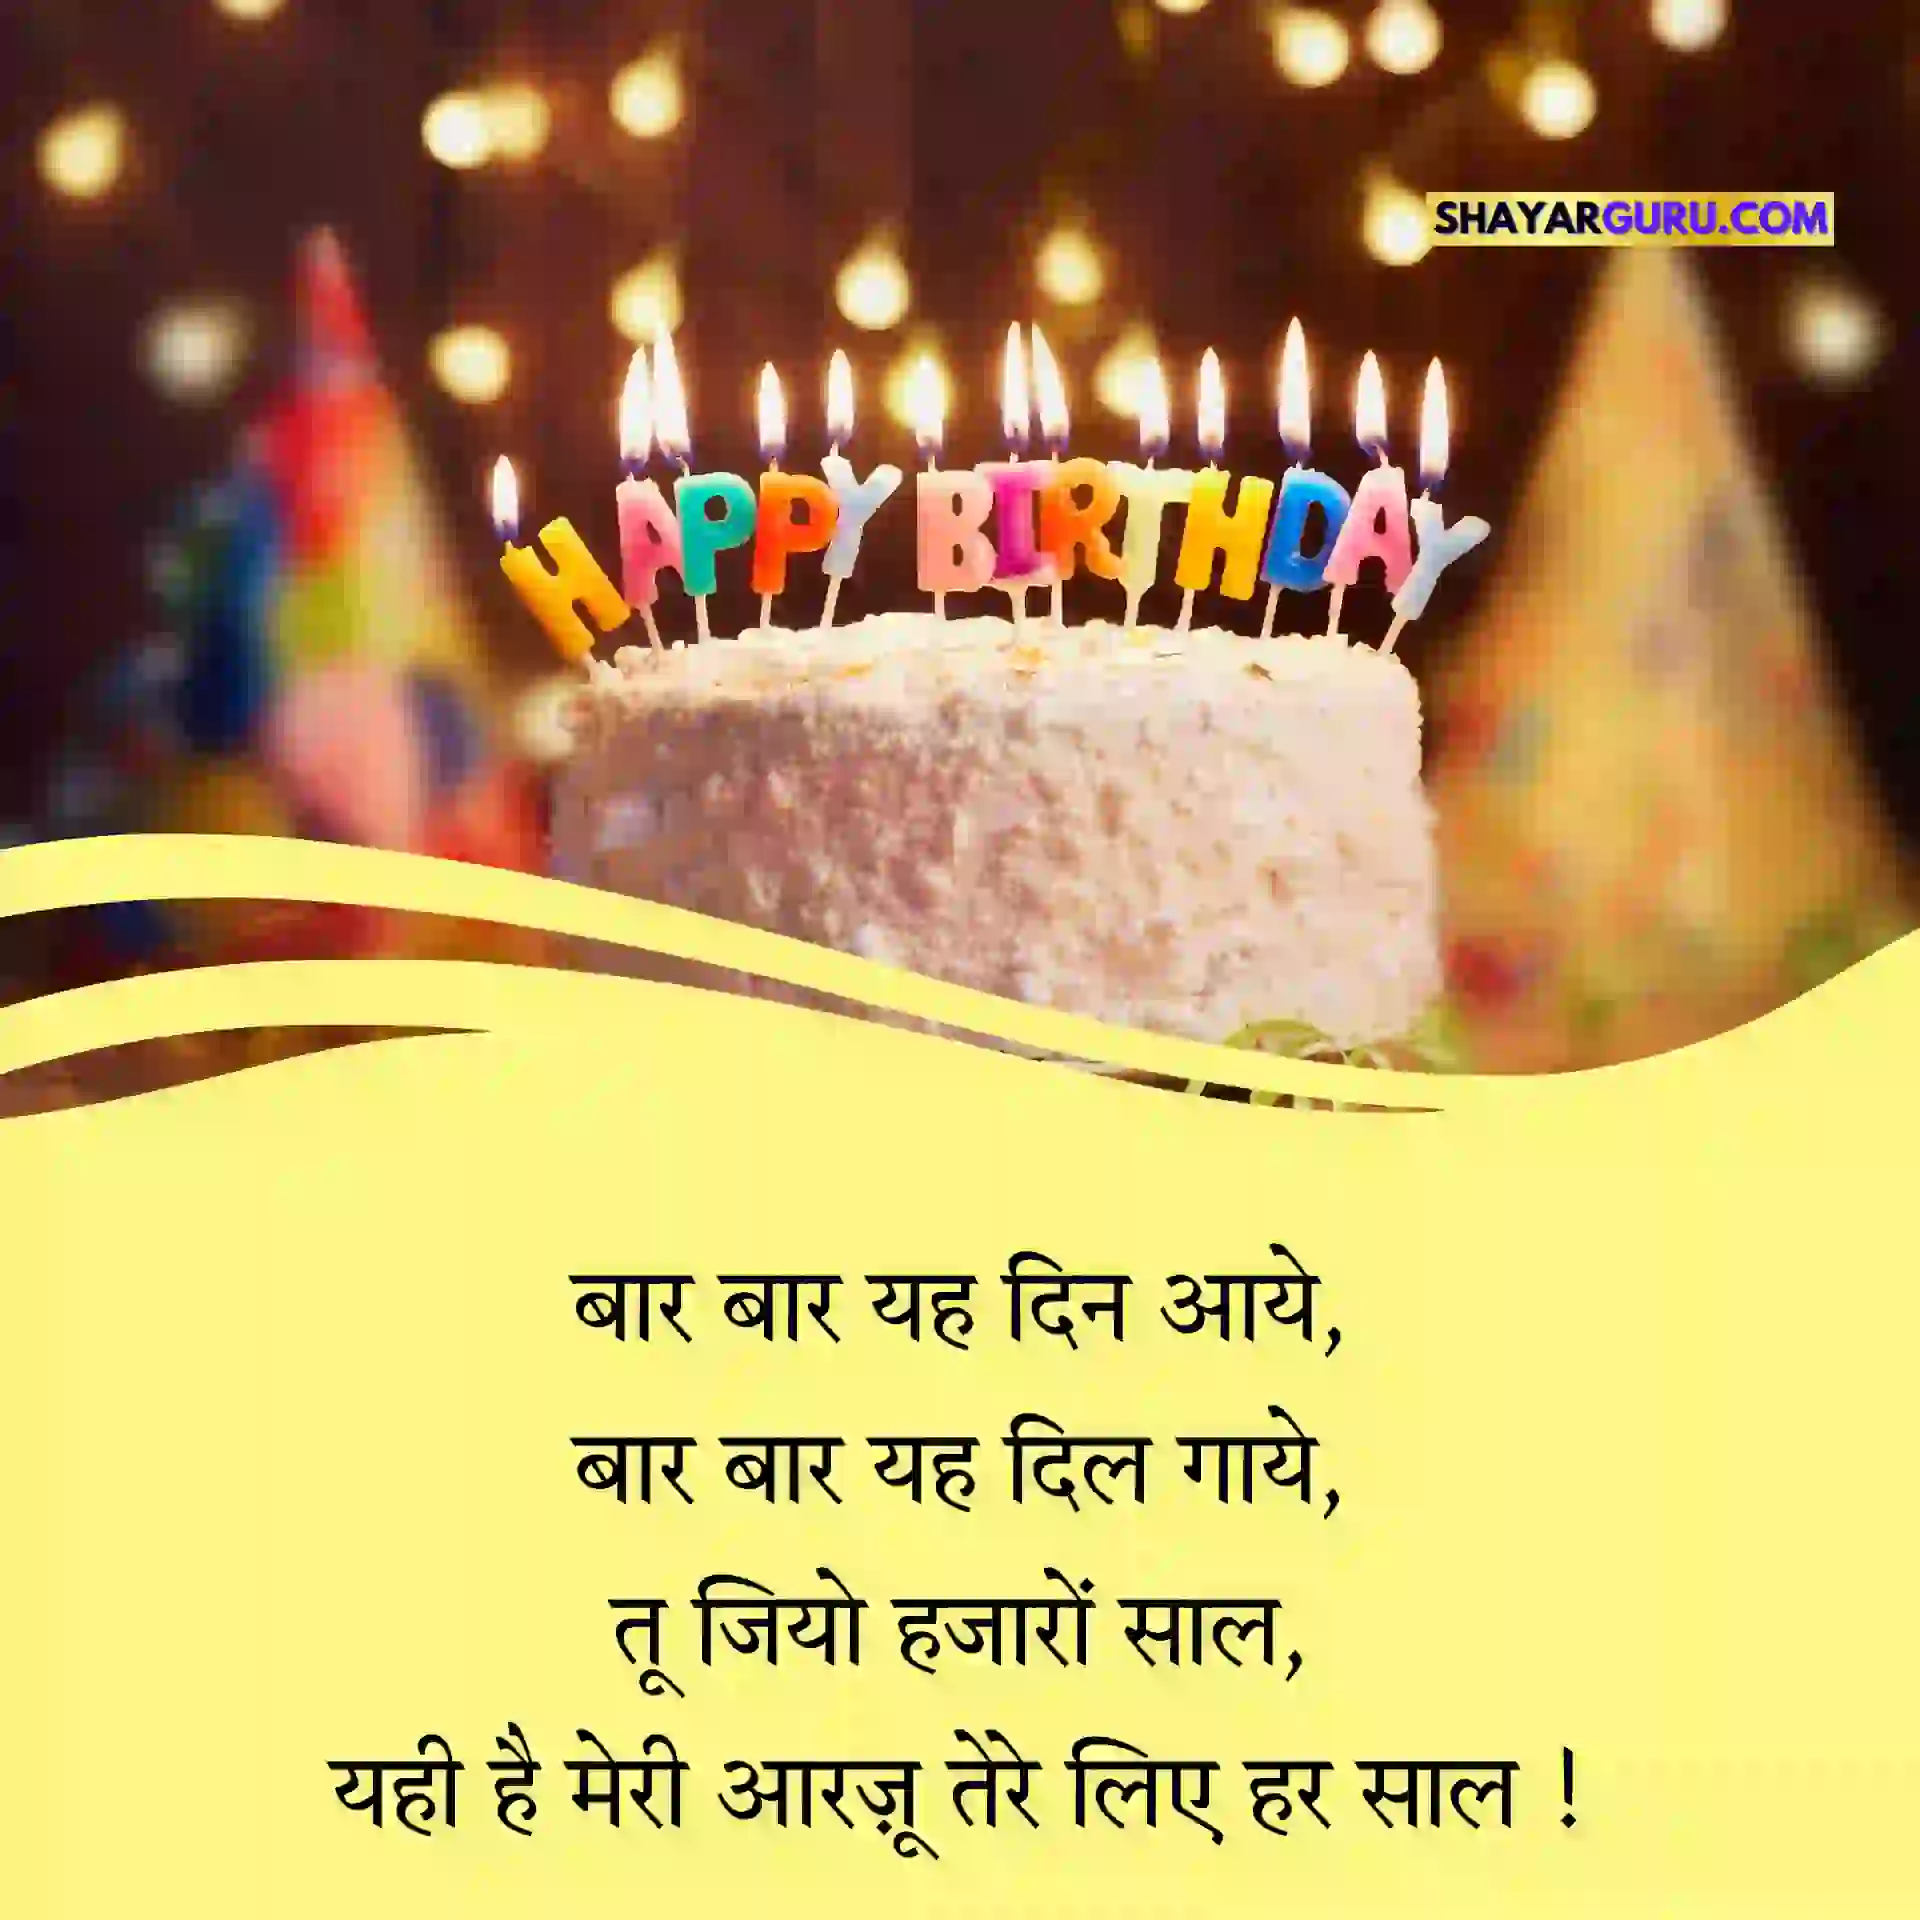 Happy Birthday Wishes for Girlfriend Boyfriend in Hindi